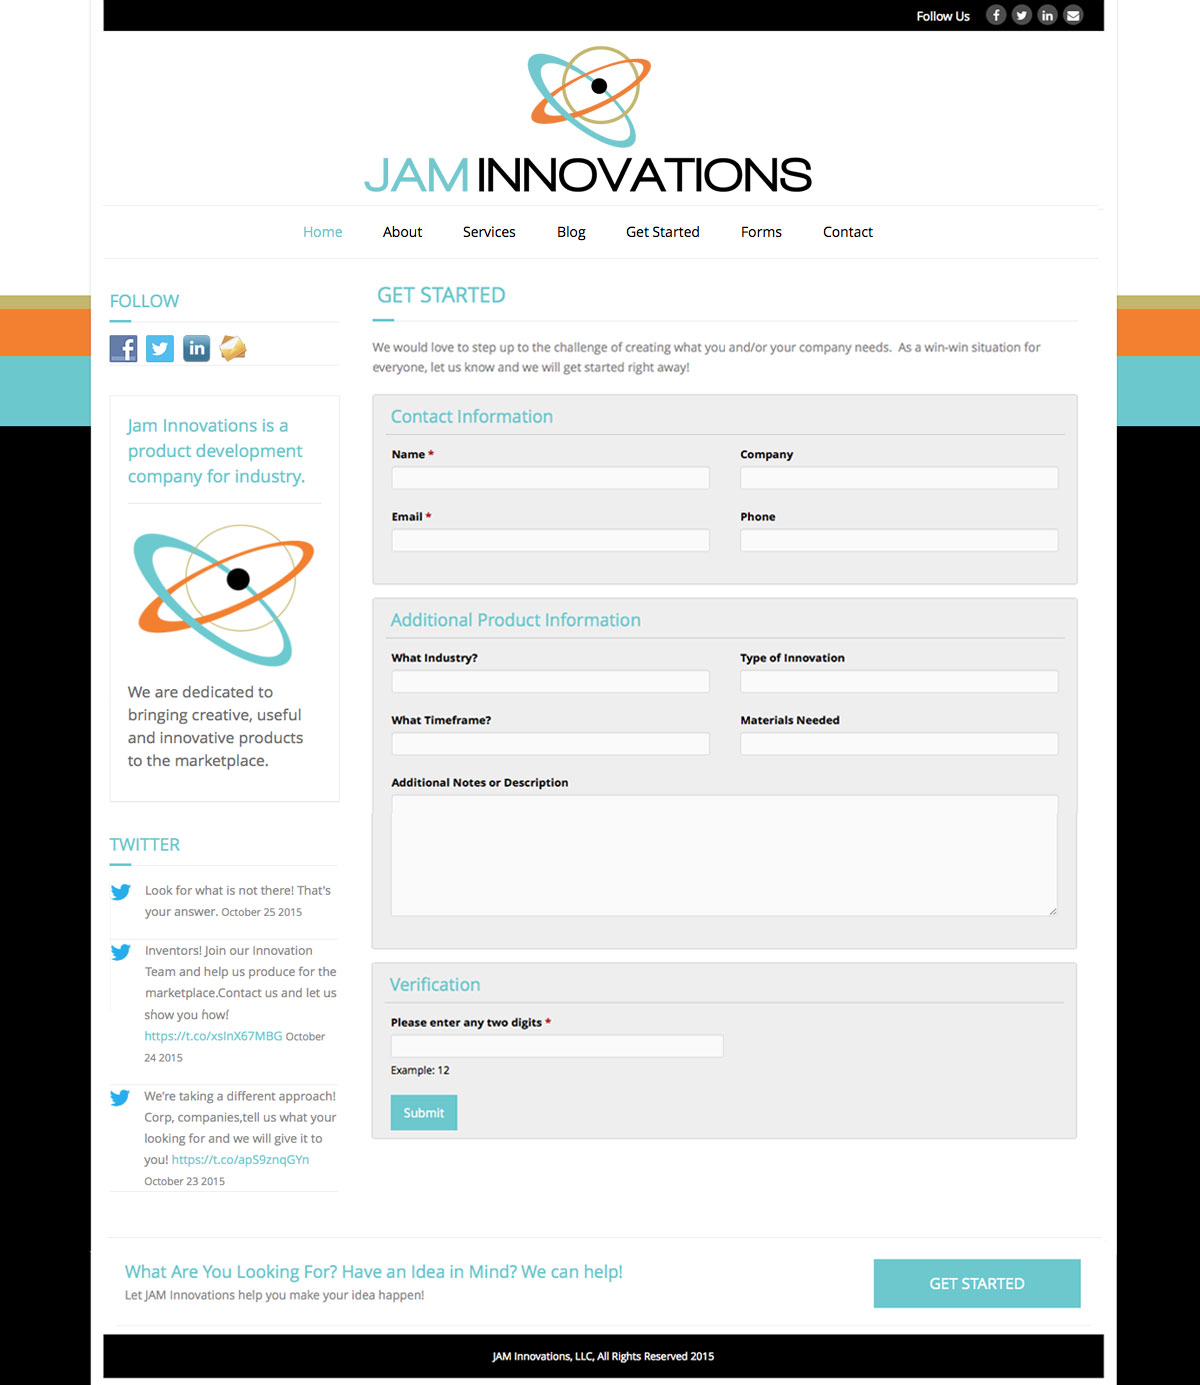 jaminnovations-web-getstarted